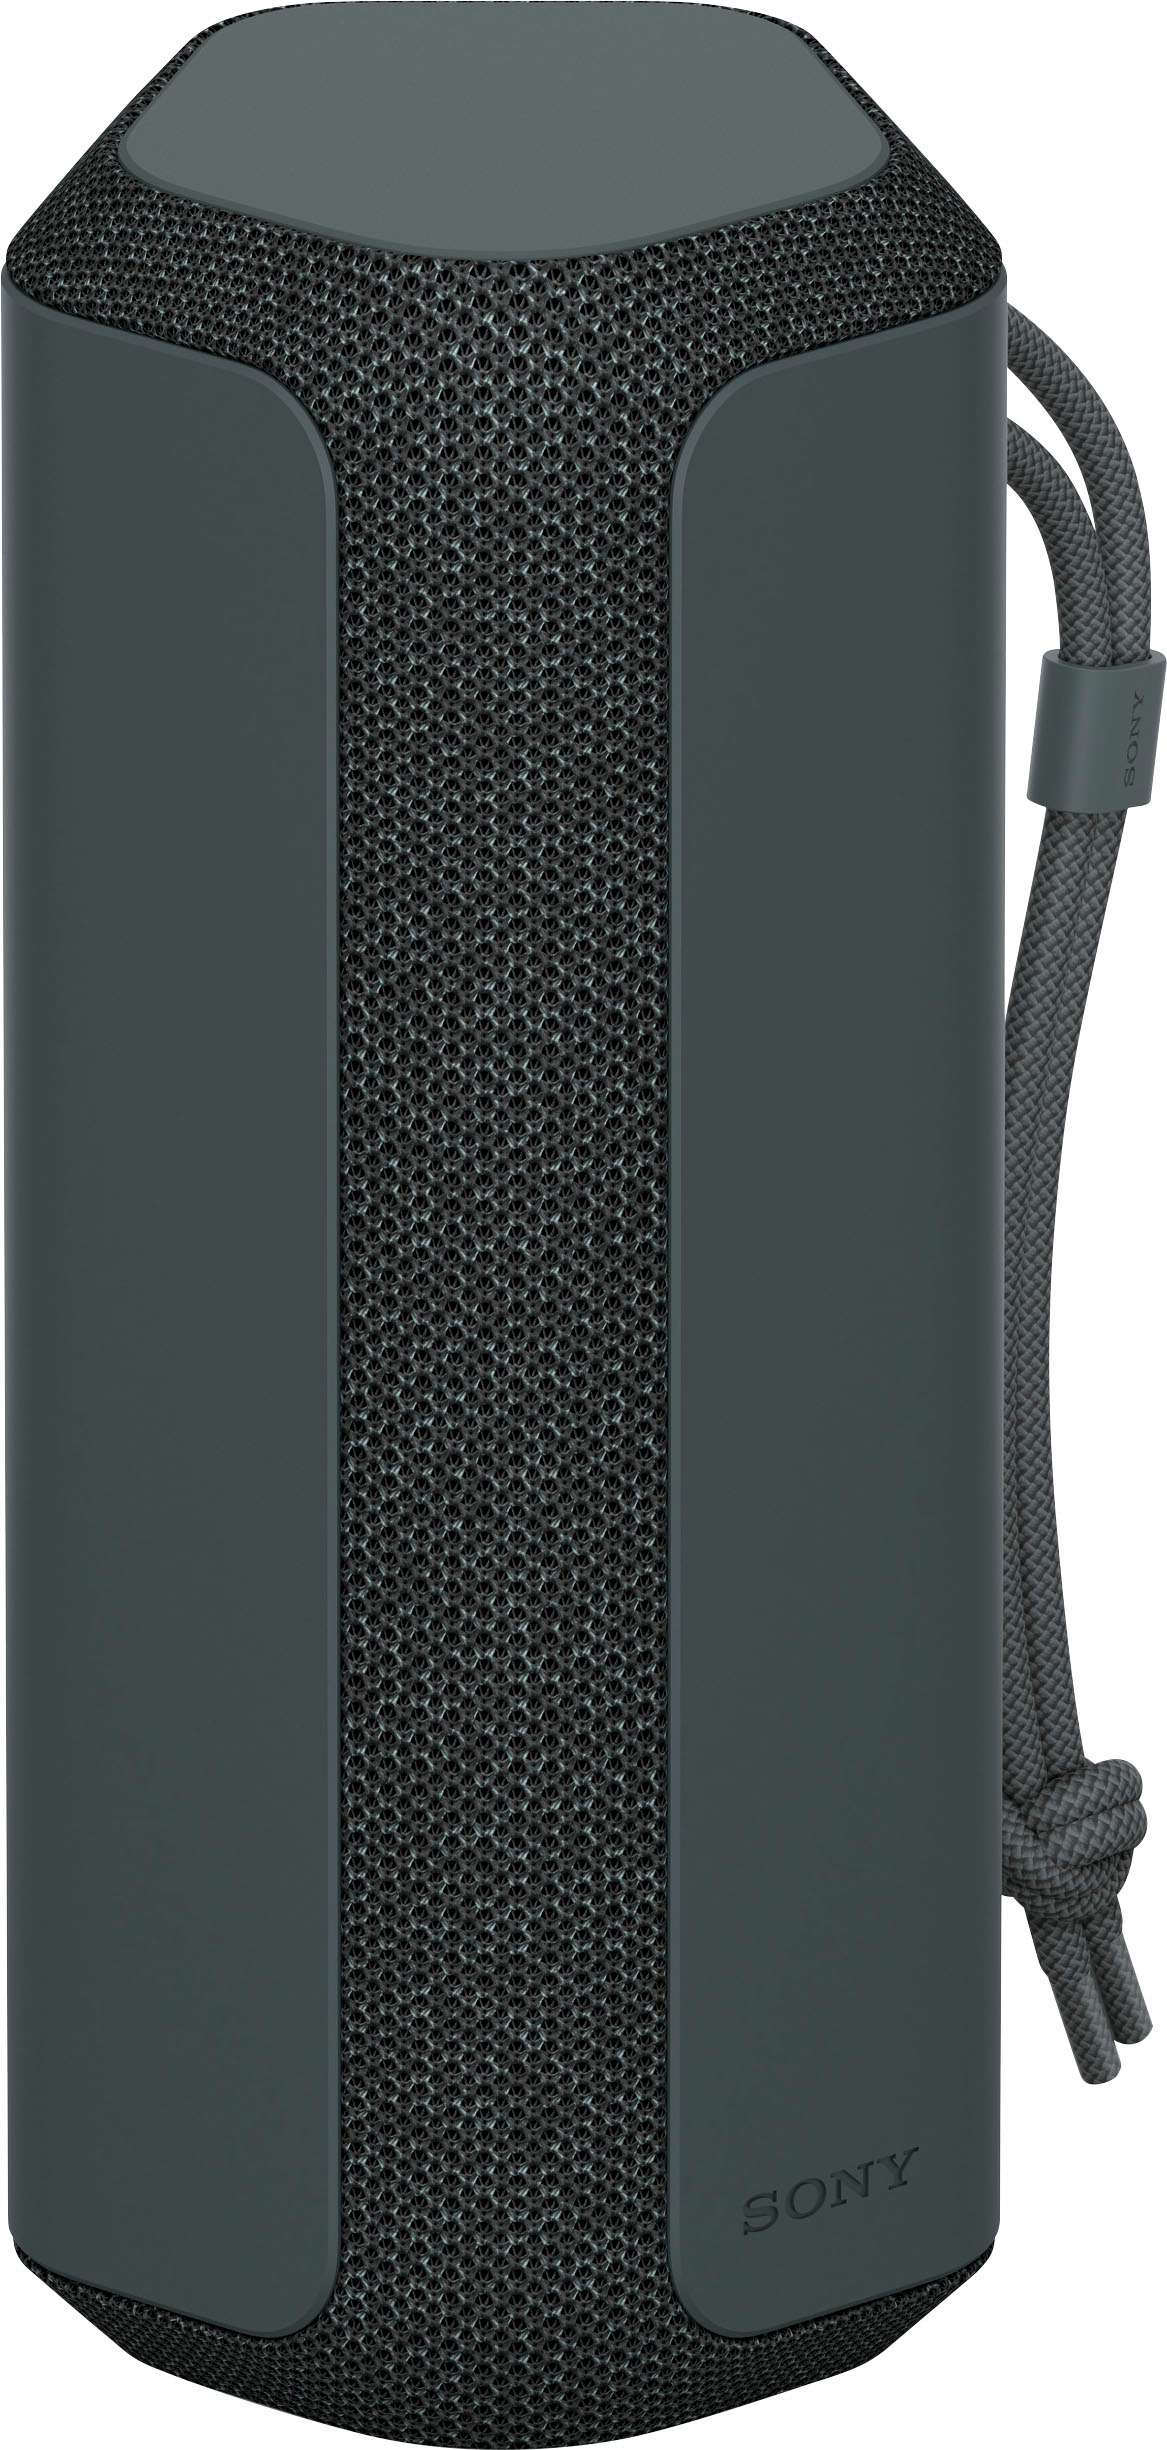 Sony XE200 Portable Waterproof and Dustproof Bluetooth Speaker Black  SRSXE200/B - Best Buy